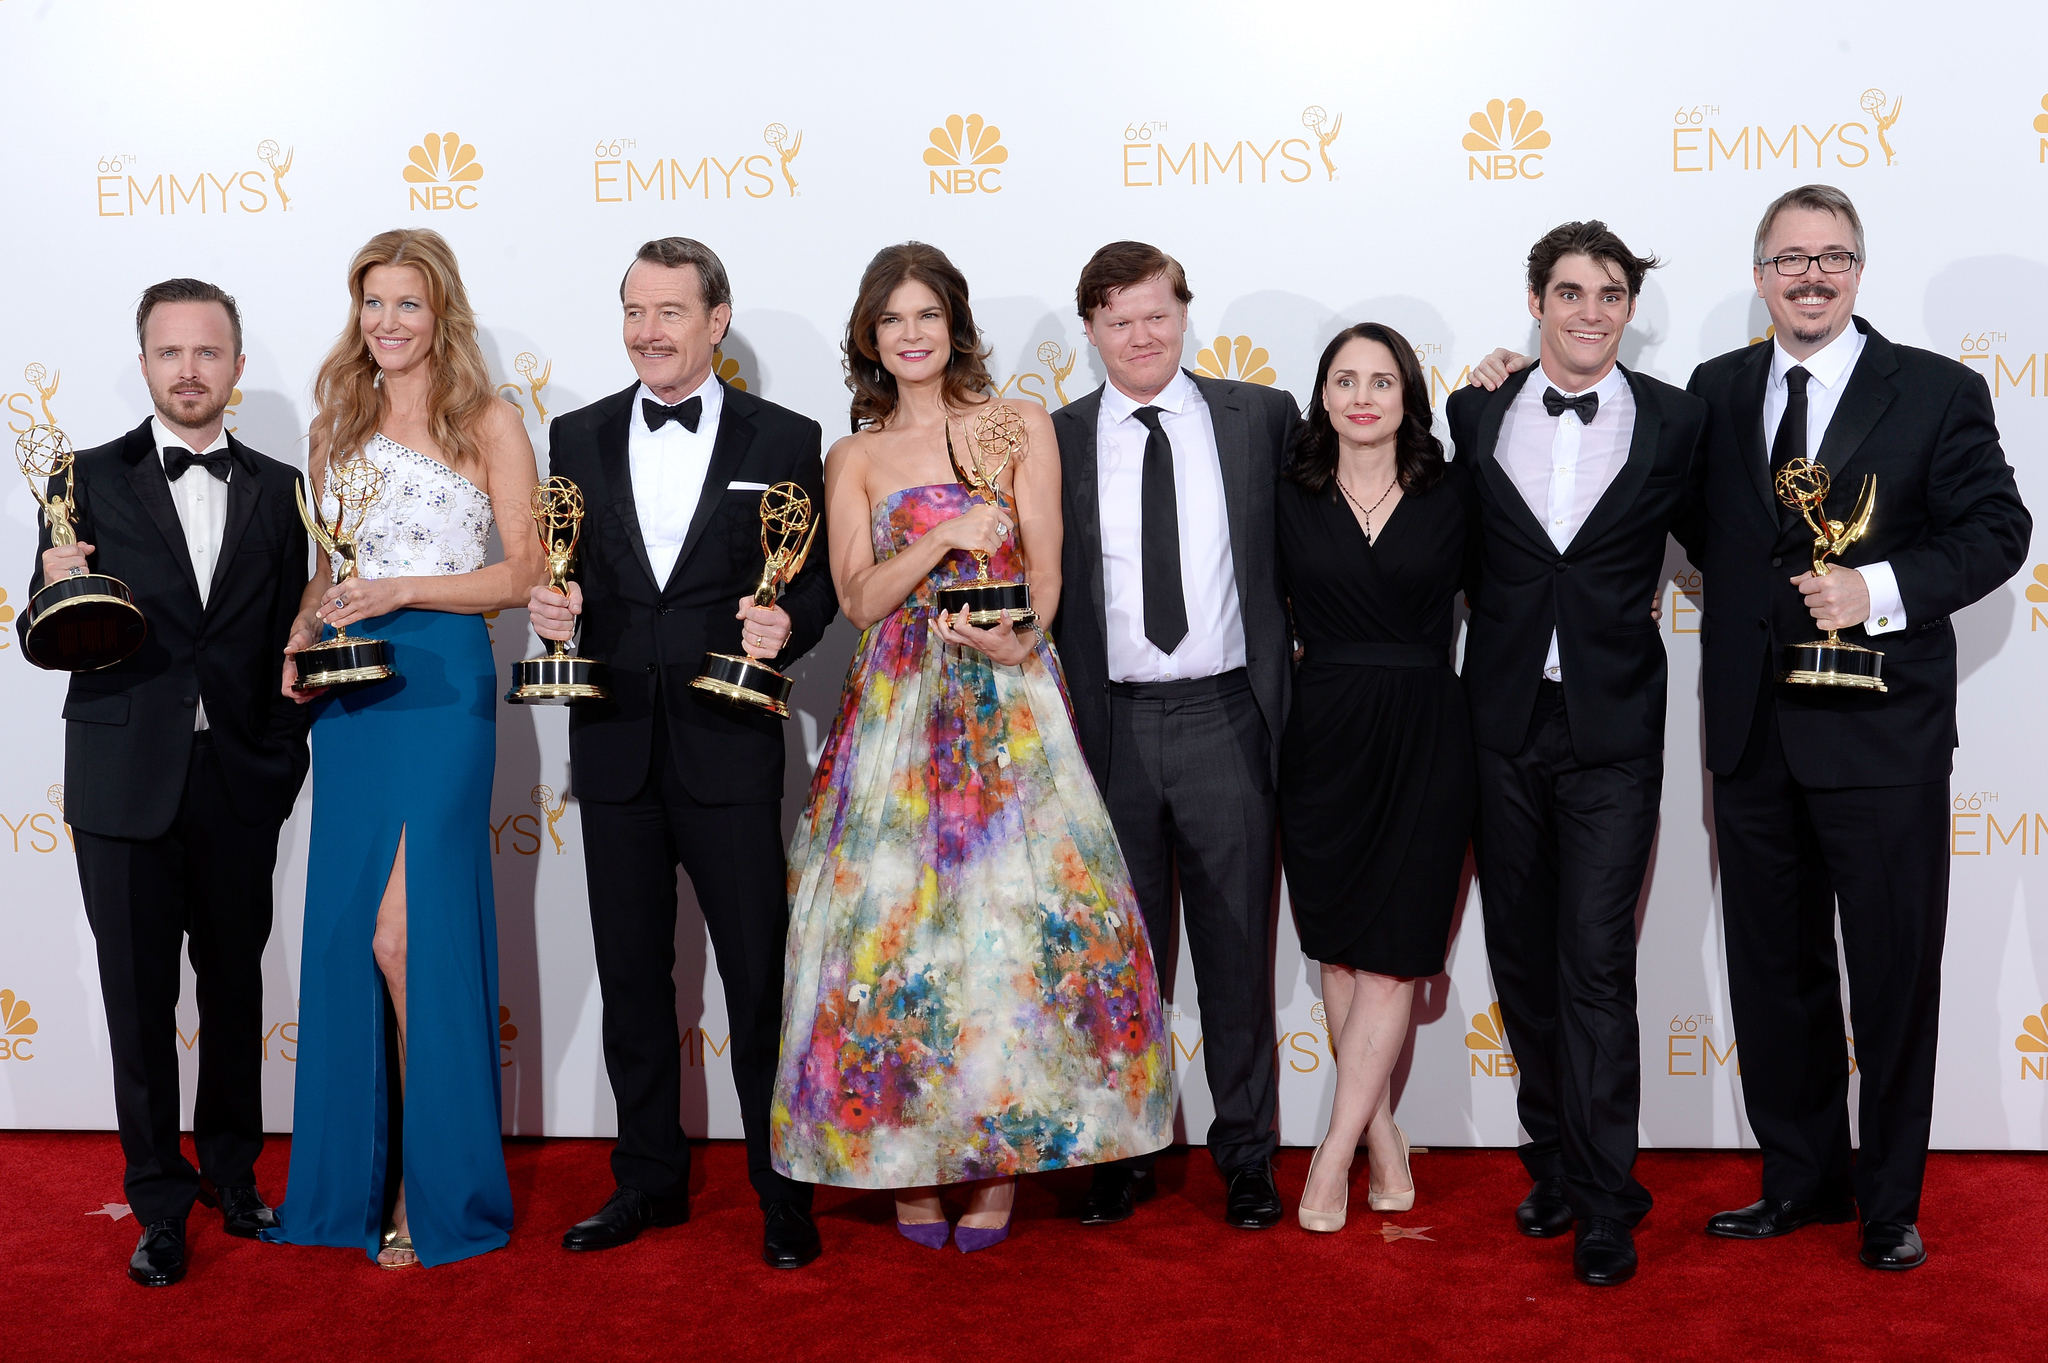 Bryan Cranston, Laura Fraser, Vince Gilligan, Anna Gunn, Aaron Paul, Jesse Plemons, Betsy Brandt and RJ Mitte at event of The 66th Primetime Emmy Awards (2014)